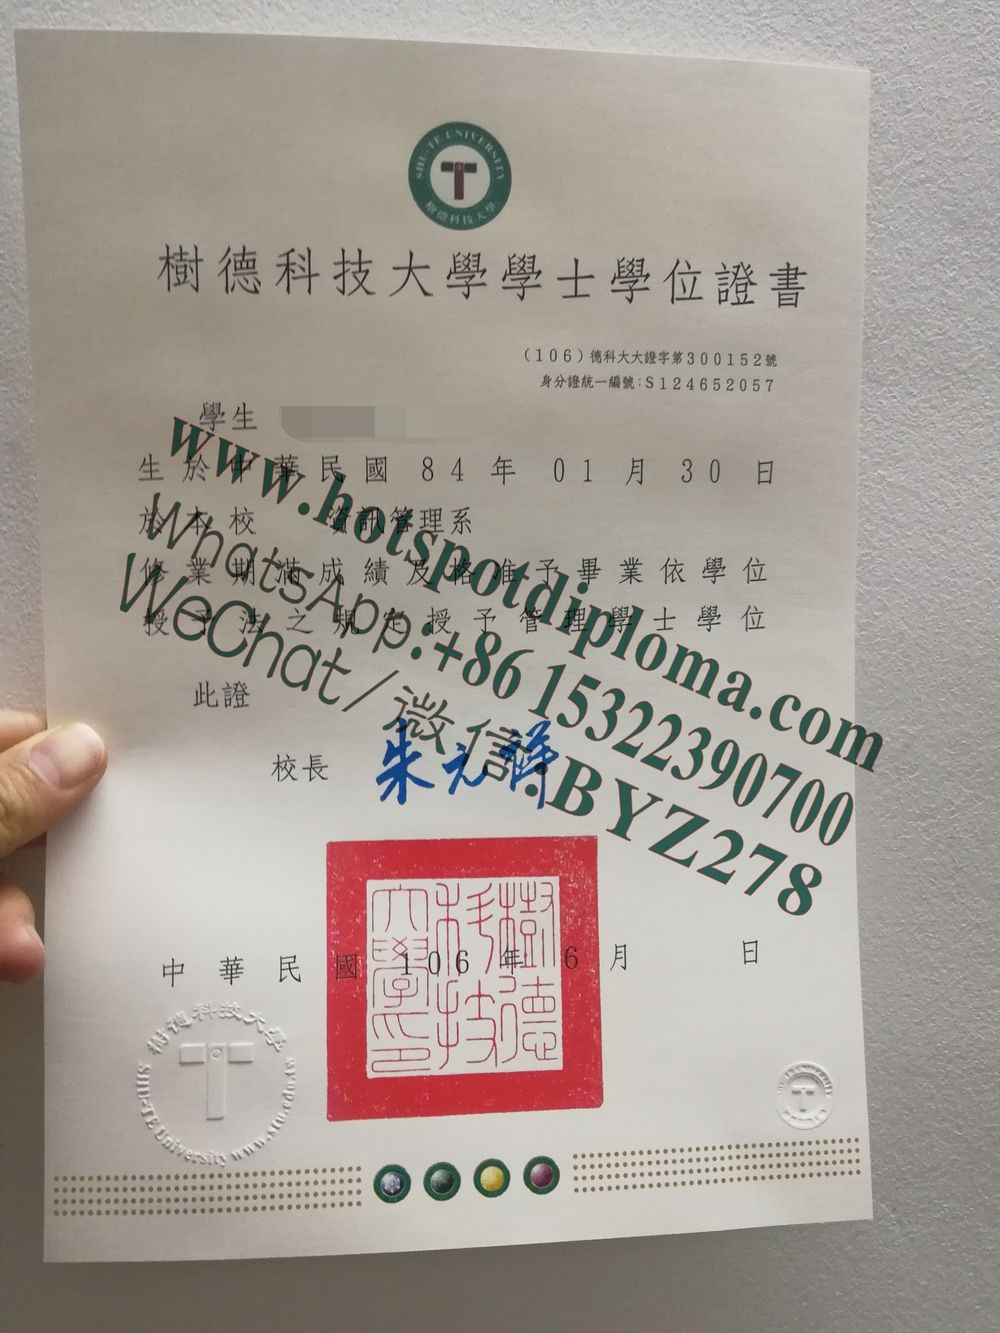 Buy Shu Te University Diploma online